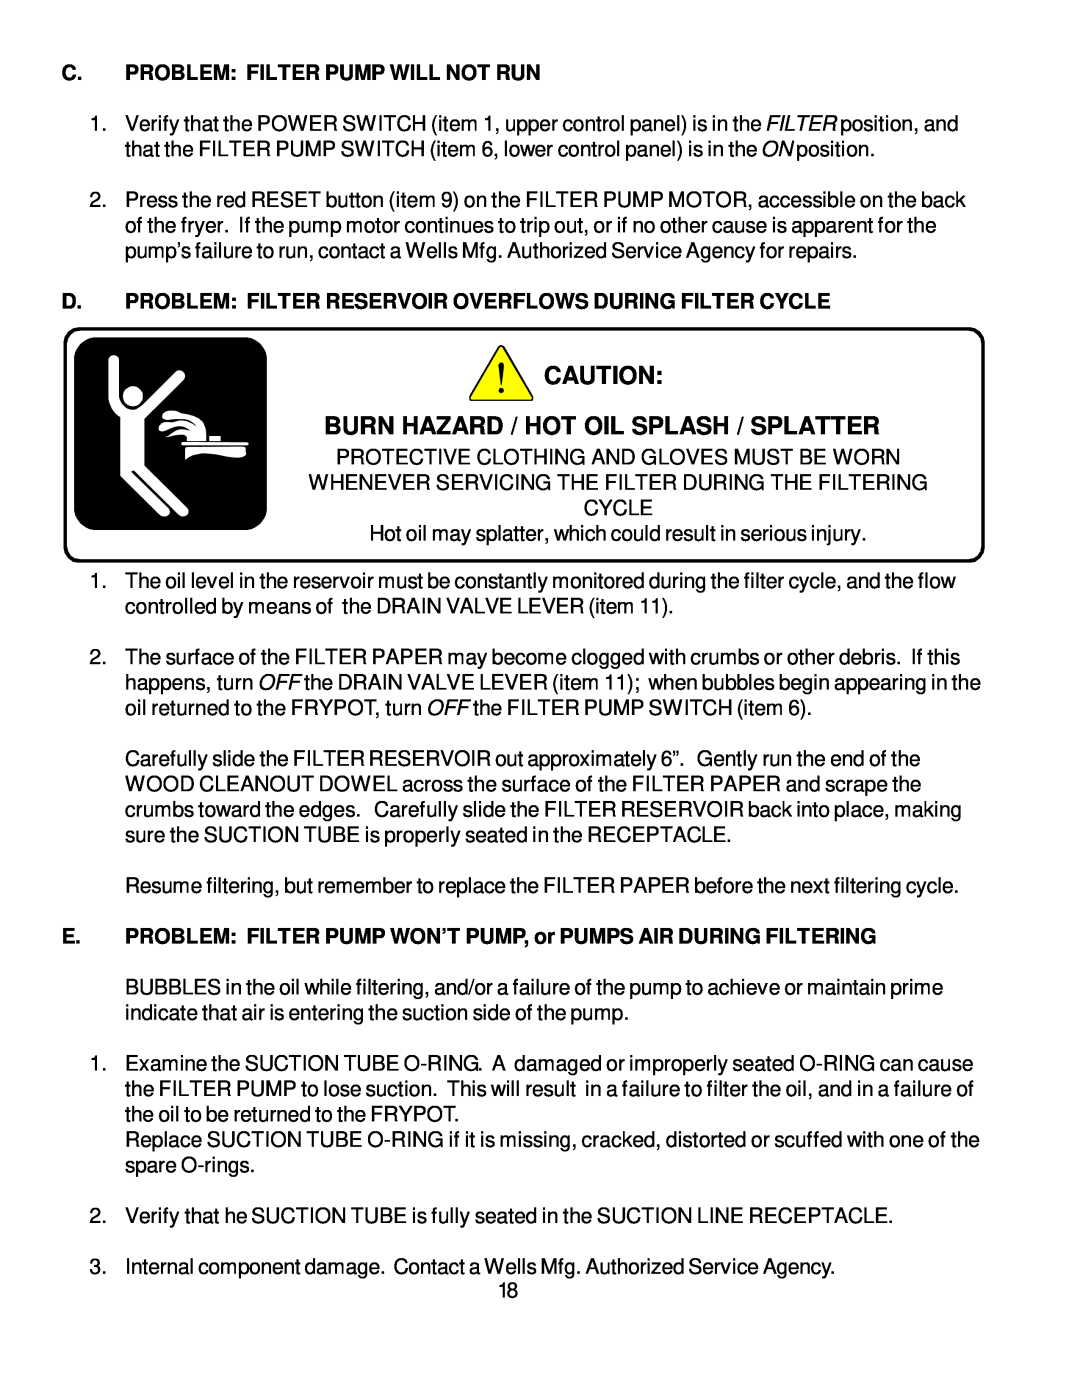 Bloomfield WFPE-30F manual Burn Hazard / Hot Oil Splash / Splatter, C. Problem Filter Pump Will Not Run 